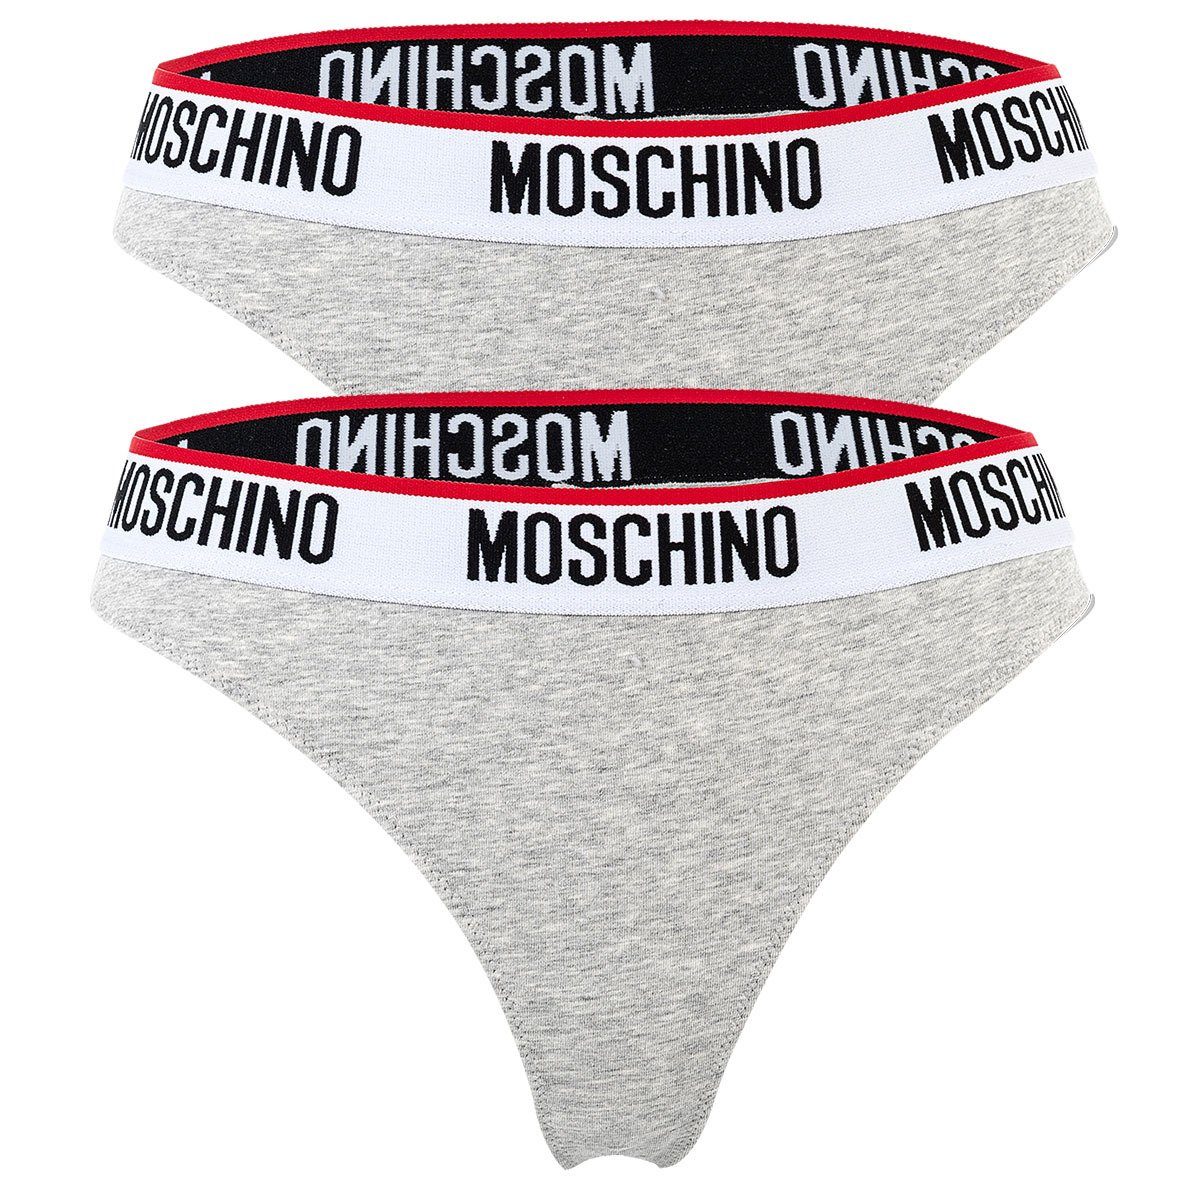 Moschino String Damen Strings 2er Pack - Slips, Unterhose, Cotton Grau